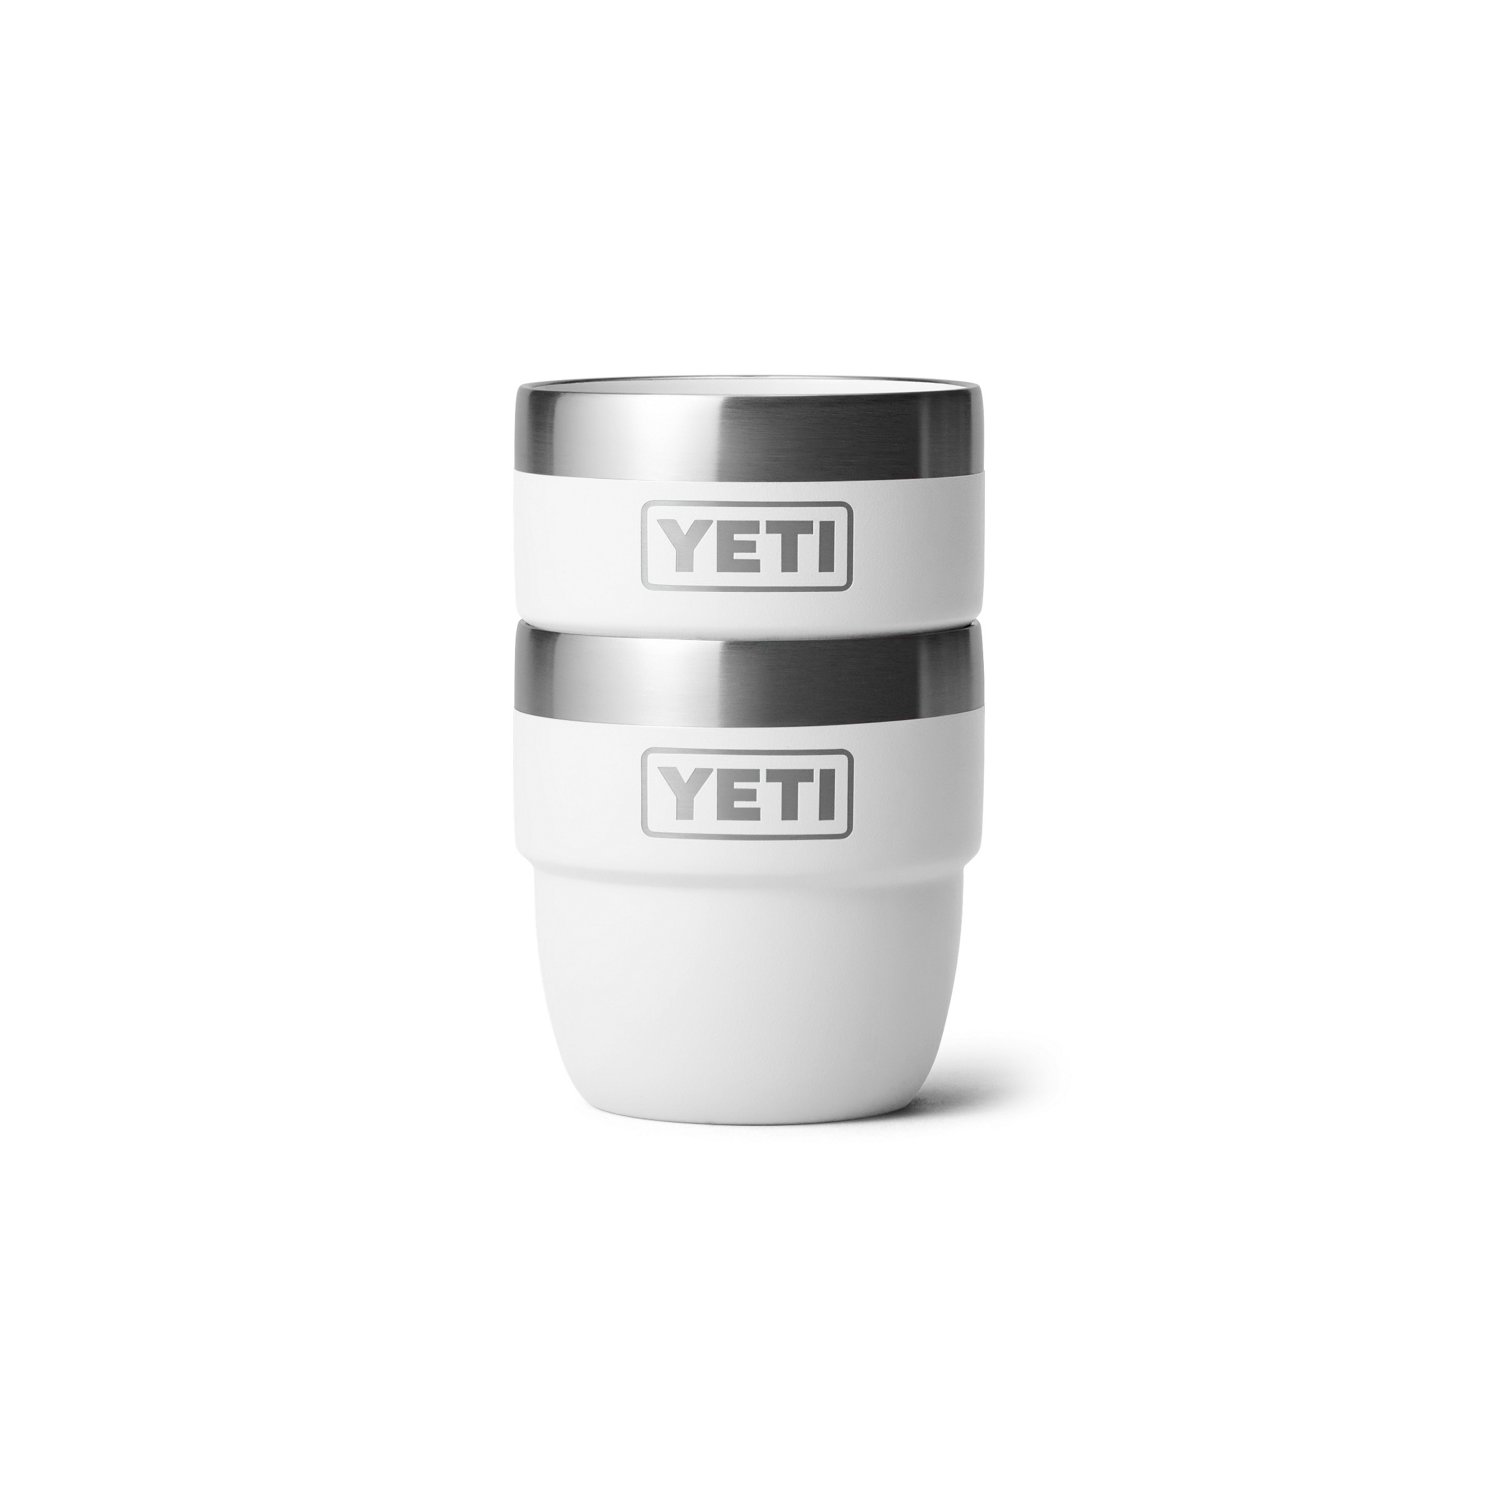 Yeti Rambler 4 oz. Stackable Espresso Cups - 2 Pack - Black